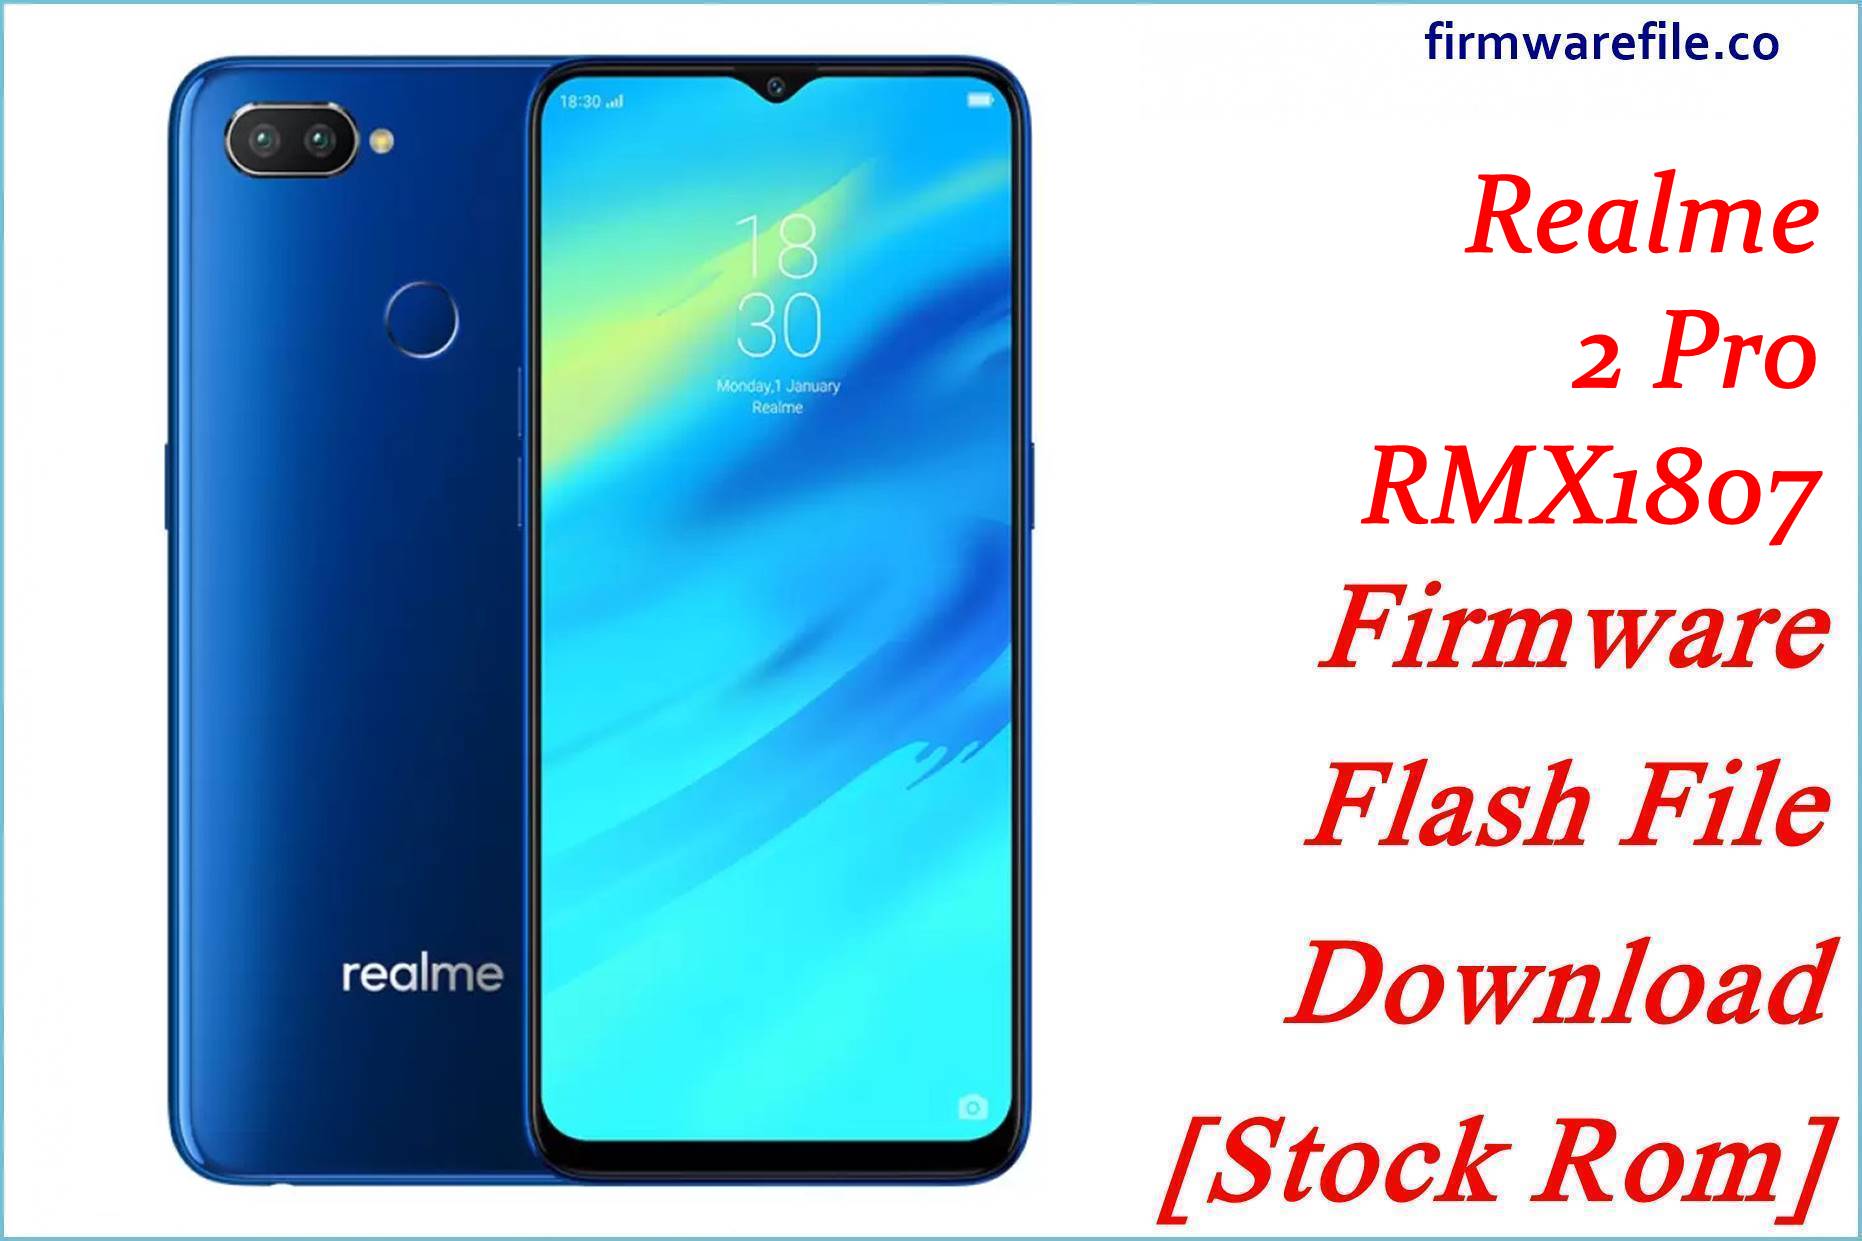 Realme 2 Pro RMX1807